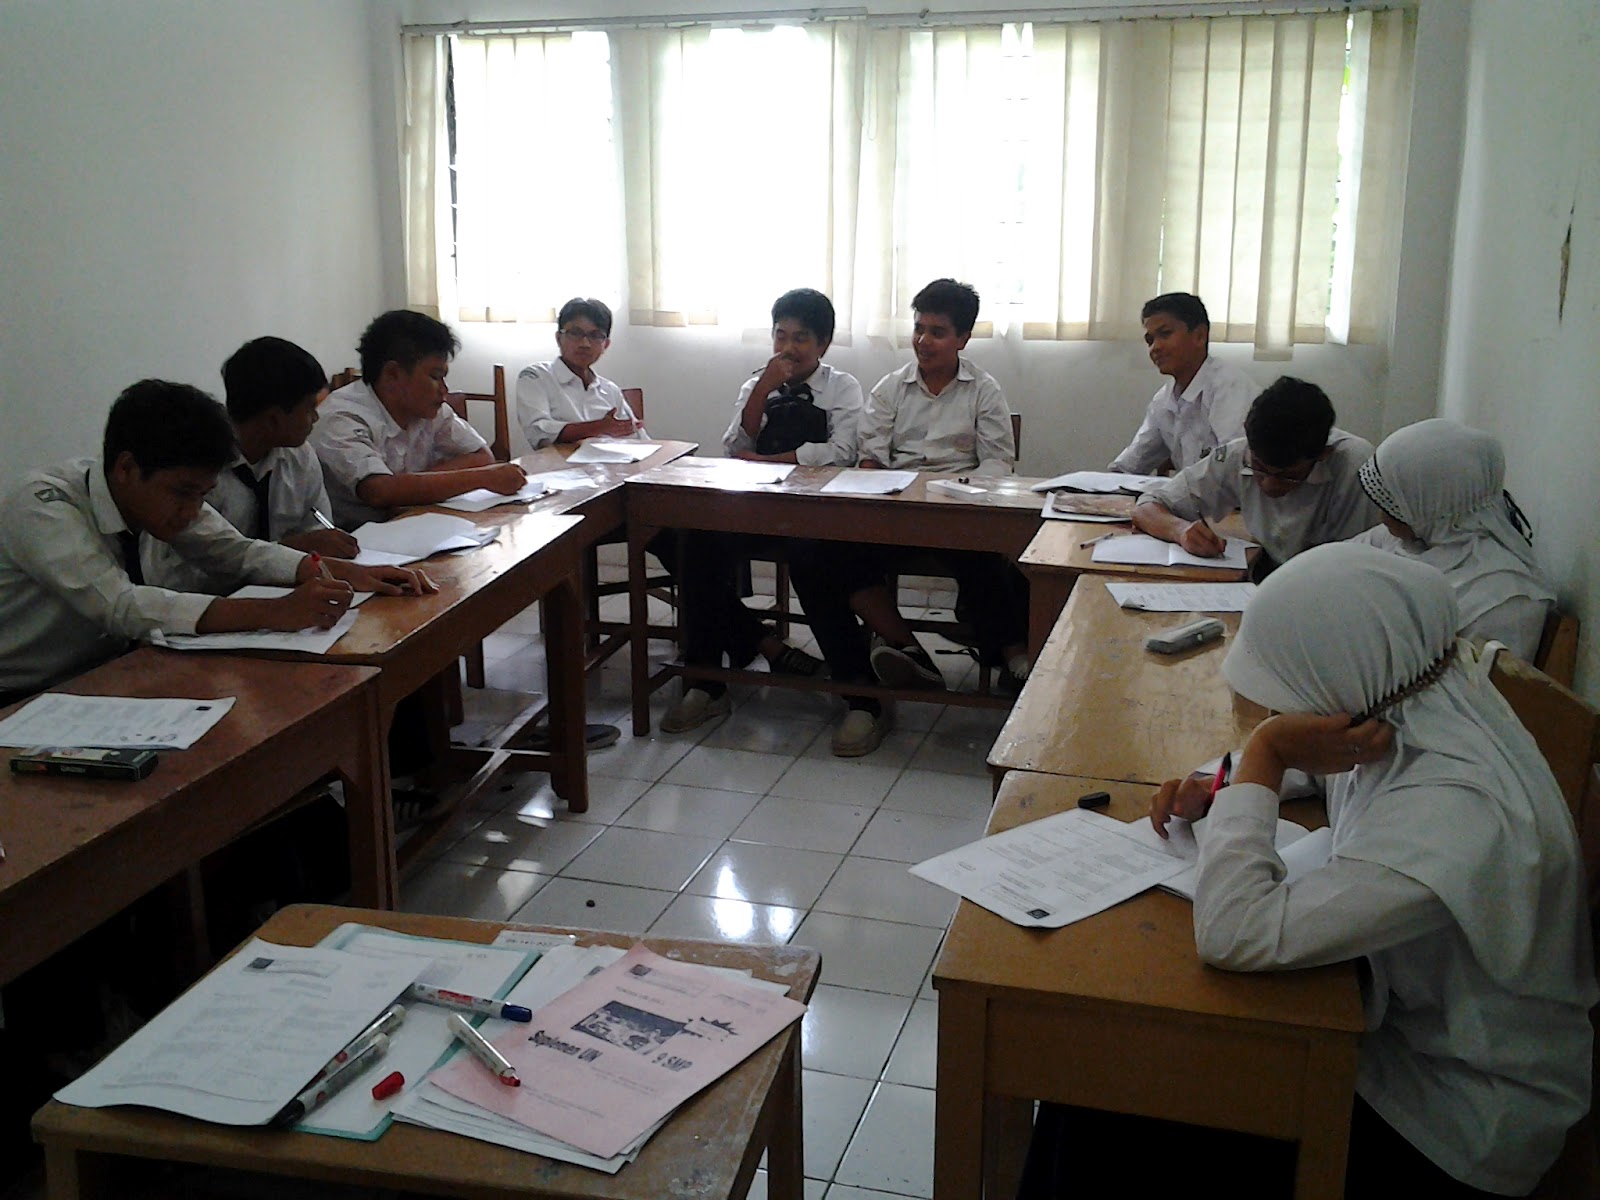 Hasil survey pada bulan April Mei 2012 terhadap sejumlah siswa kelas 9 SMP di dua sekolah di Jakarta Timur yaitu SMPN 117 Jakarta dan SMPIT Ar Rudho